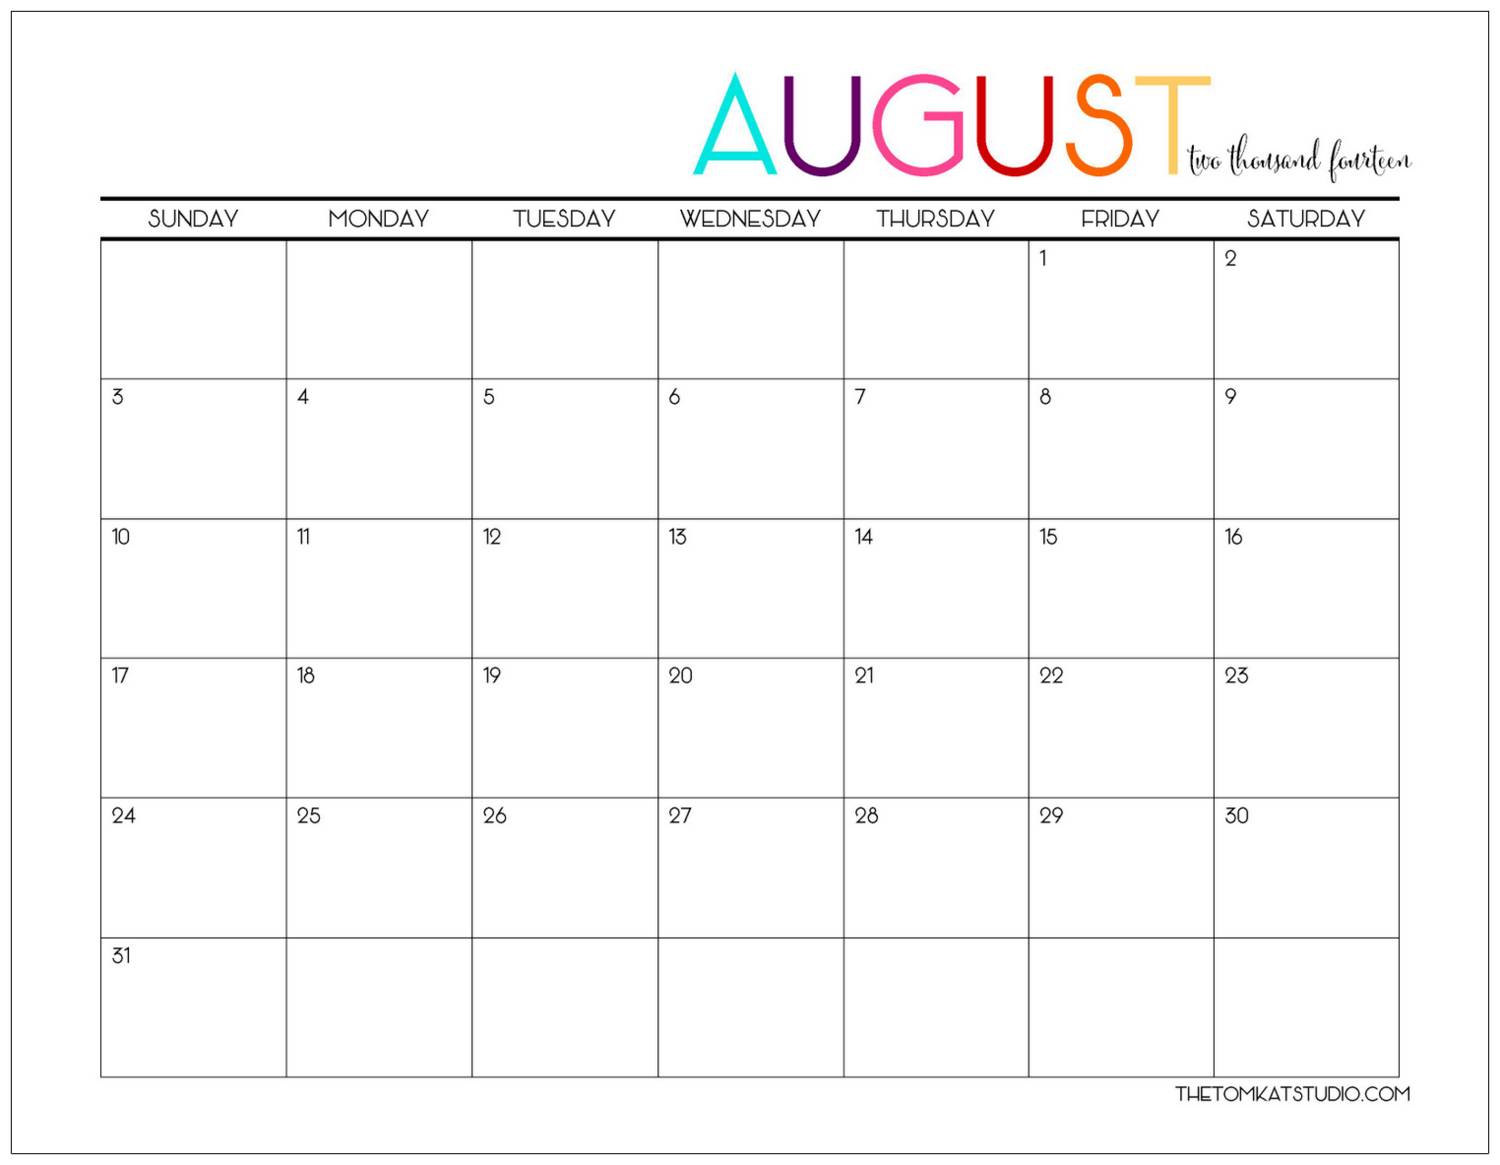 August Calendar The TomKat Studio Blog